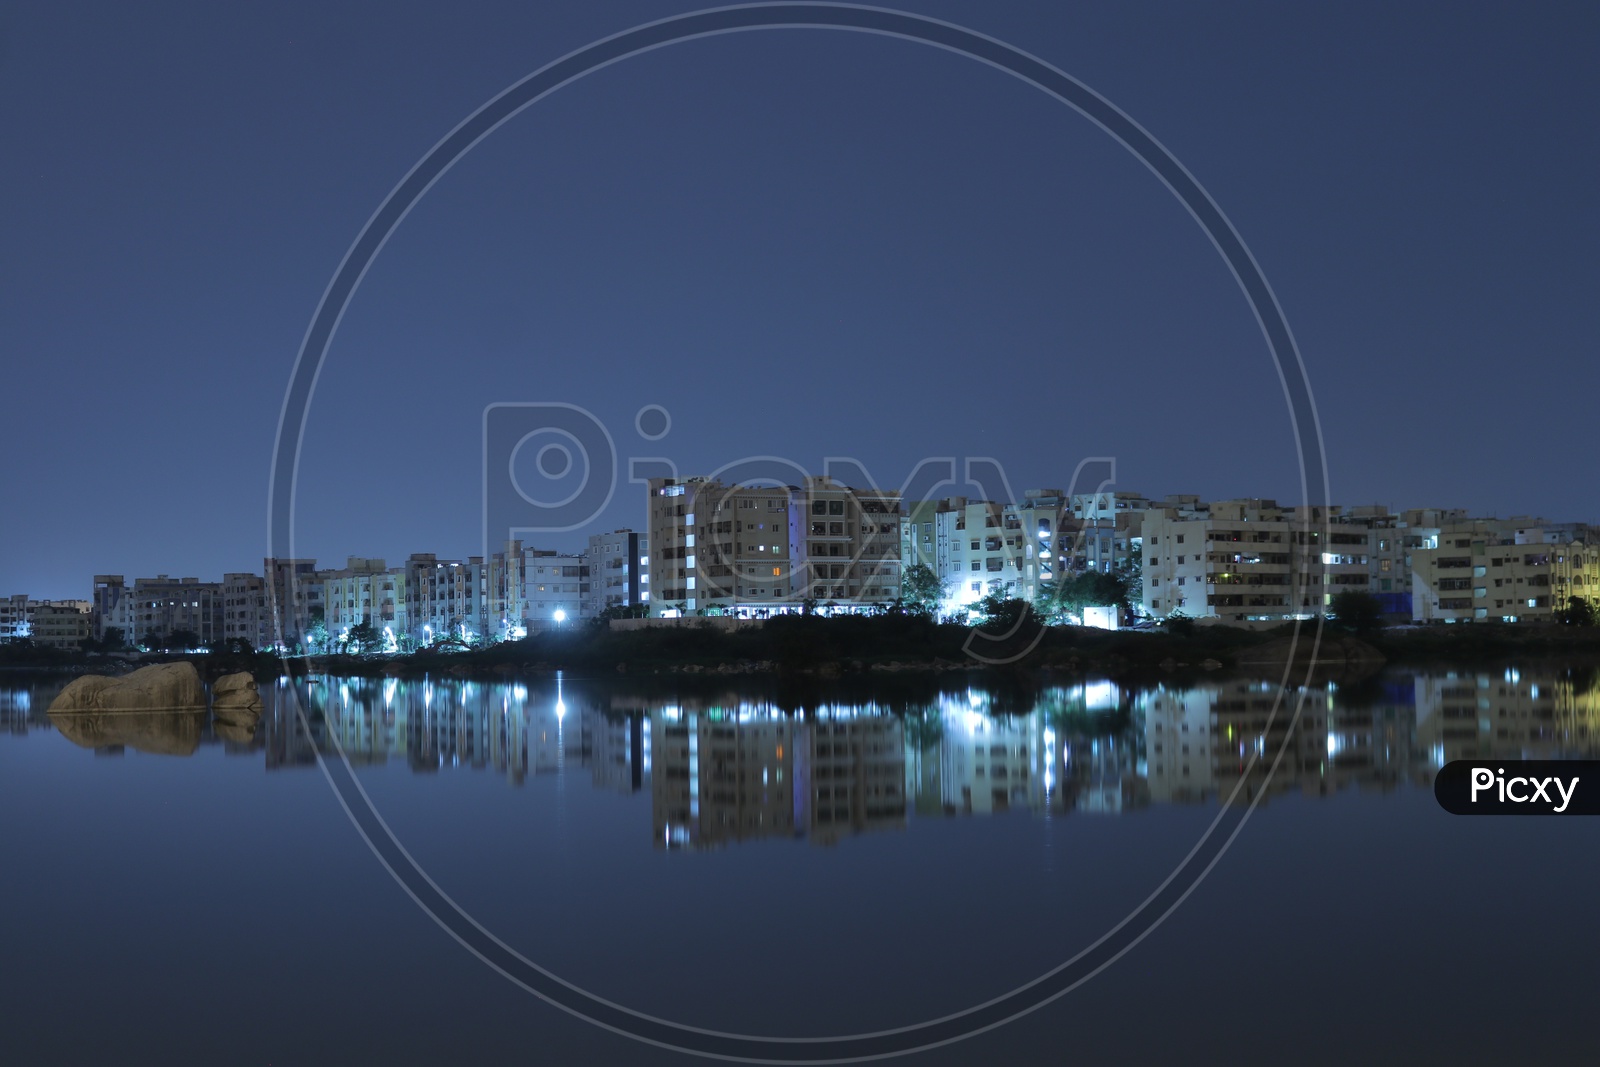 Night view of reflections of buildings in the water at Pragathi Nagar Lake